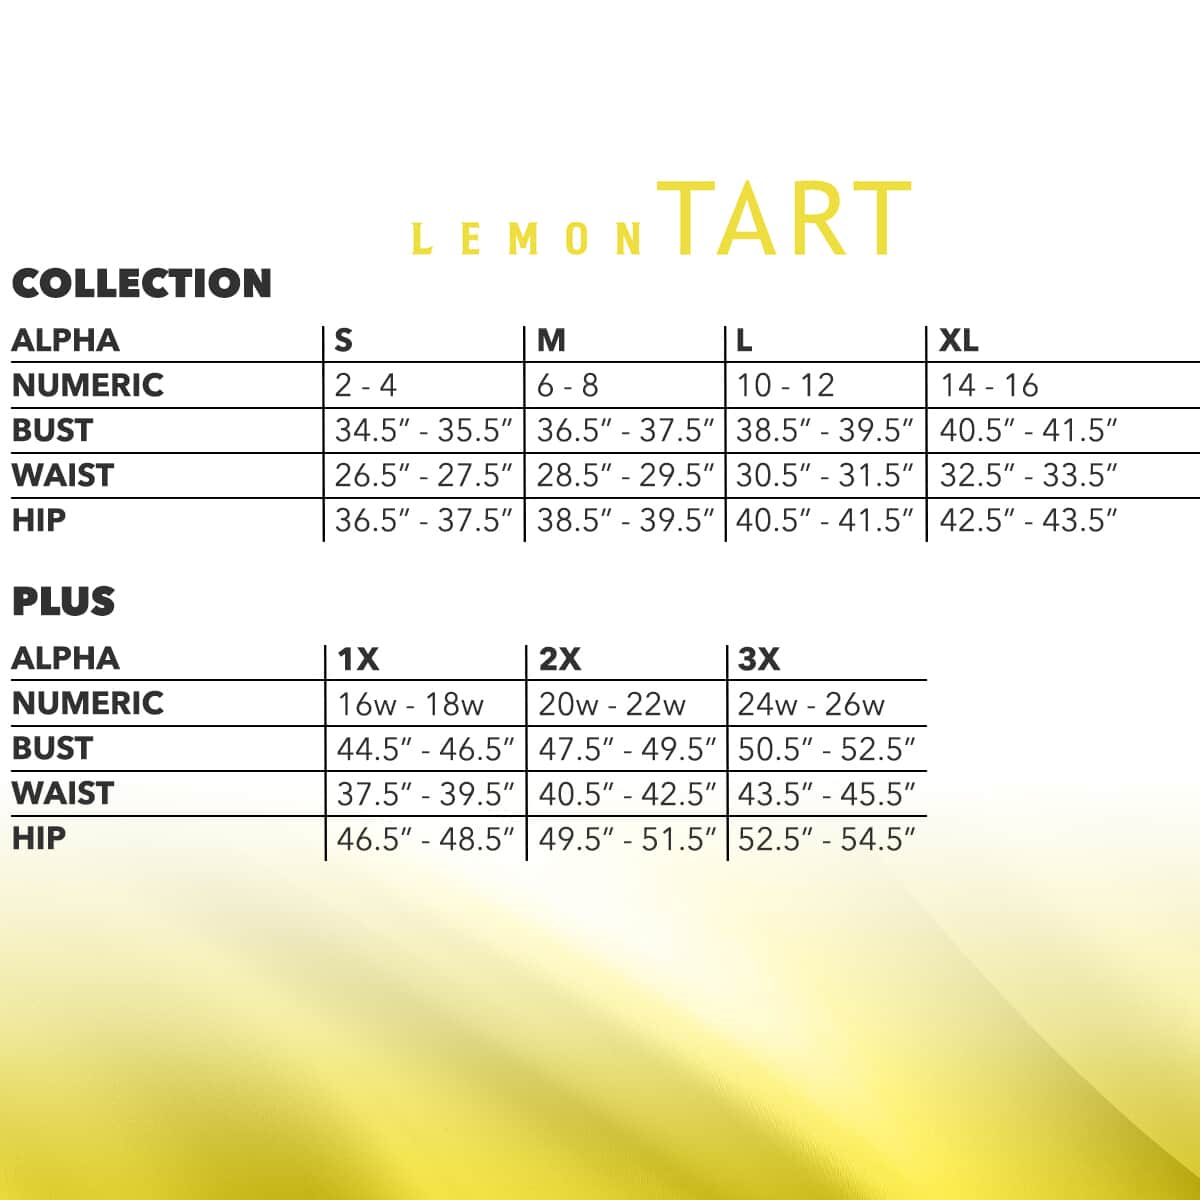 LEMON TART Black Microfiber Blanche Pant with Drawstring - XL image number 4